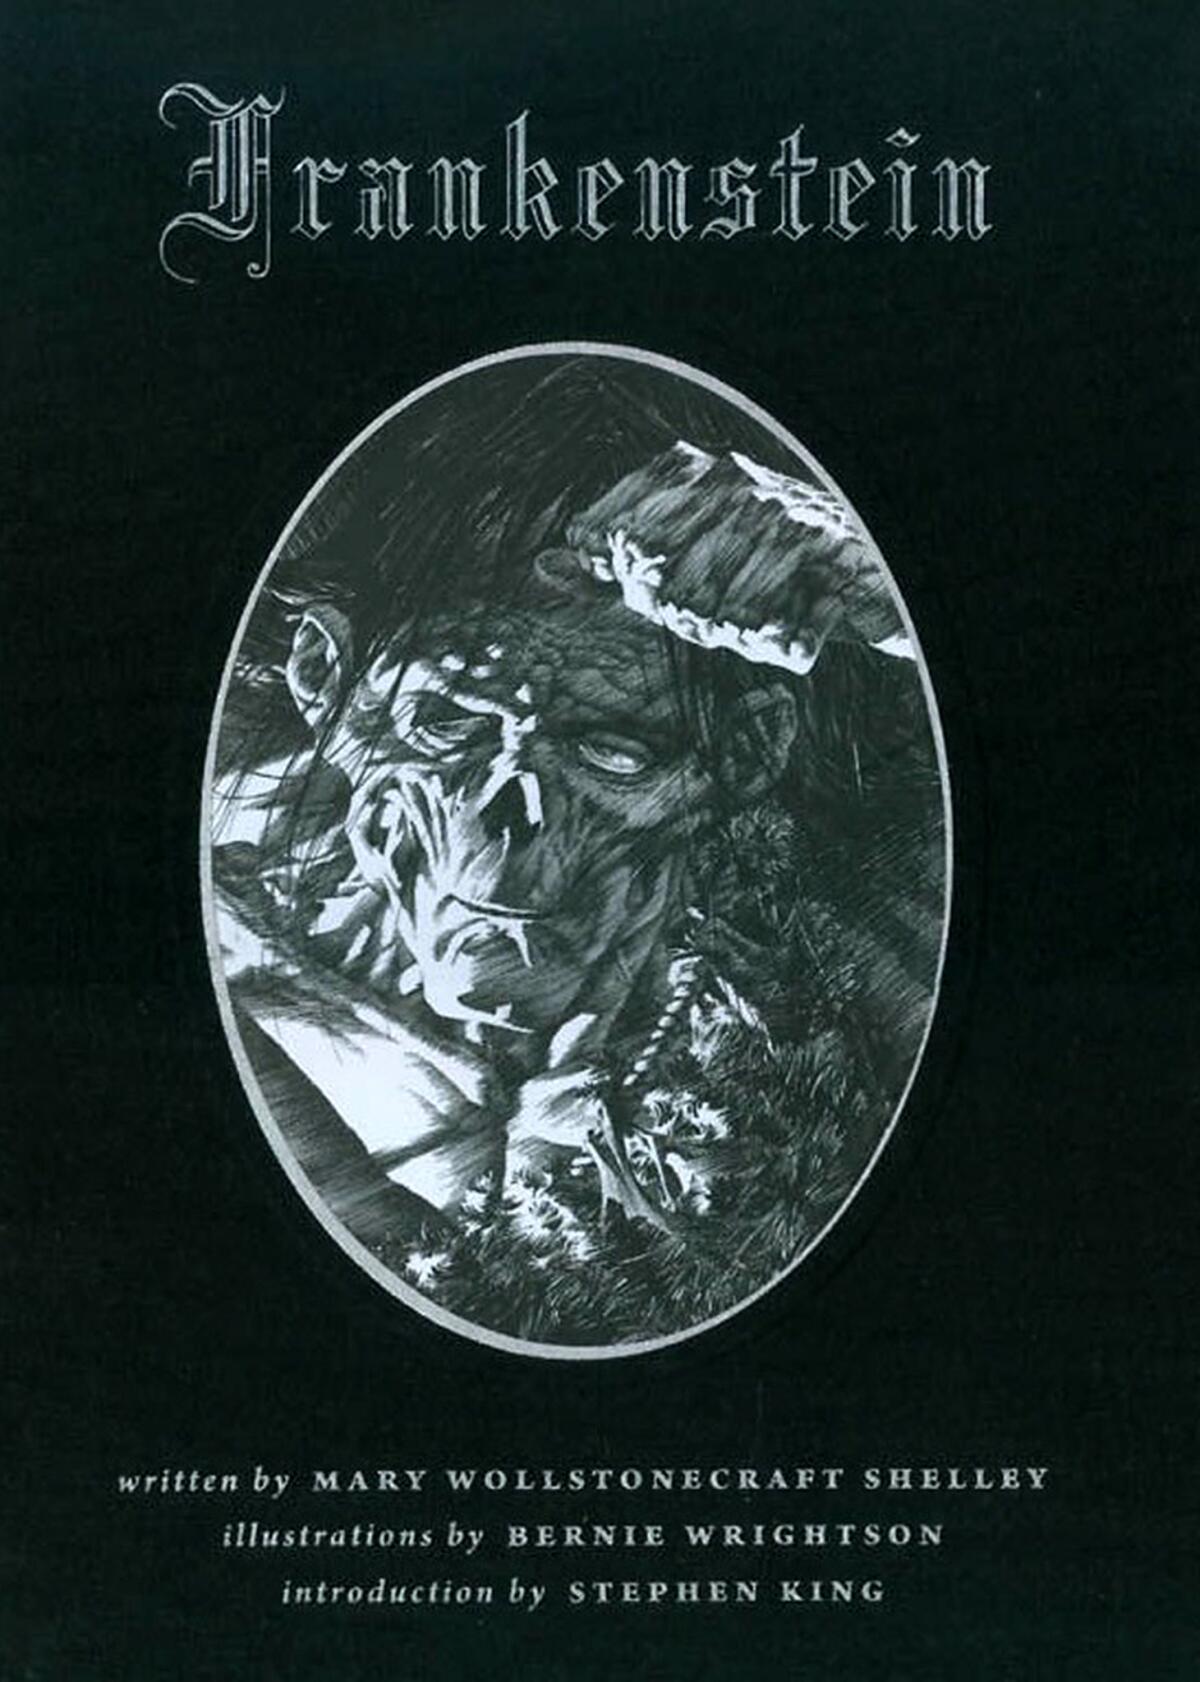 Bernie Wrightson's cover for "Frankenstein" (Dark Horse Books/ Bernie Wrightson)